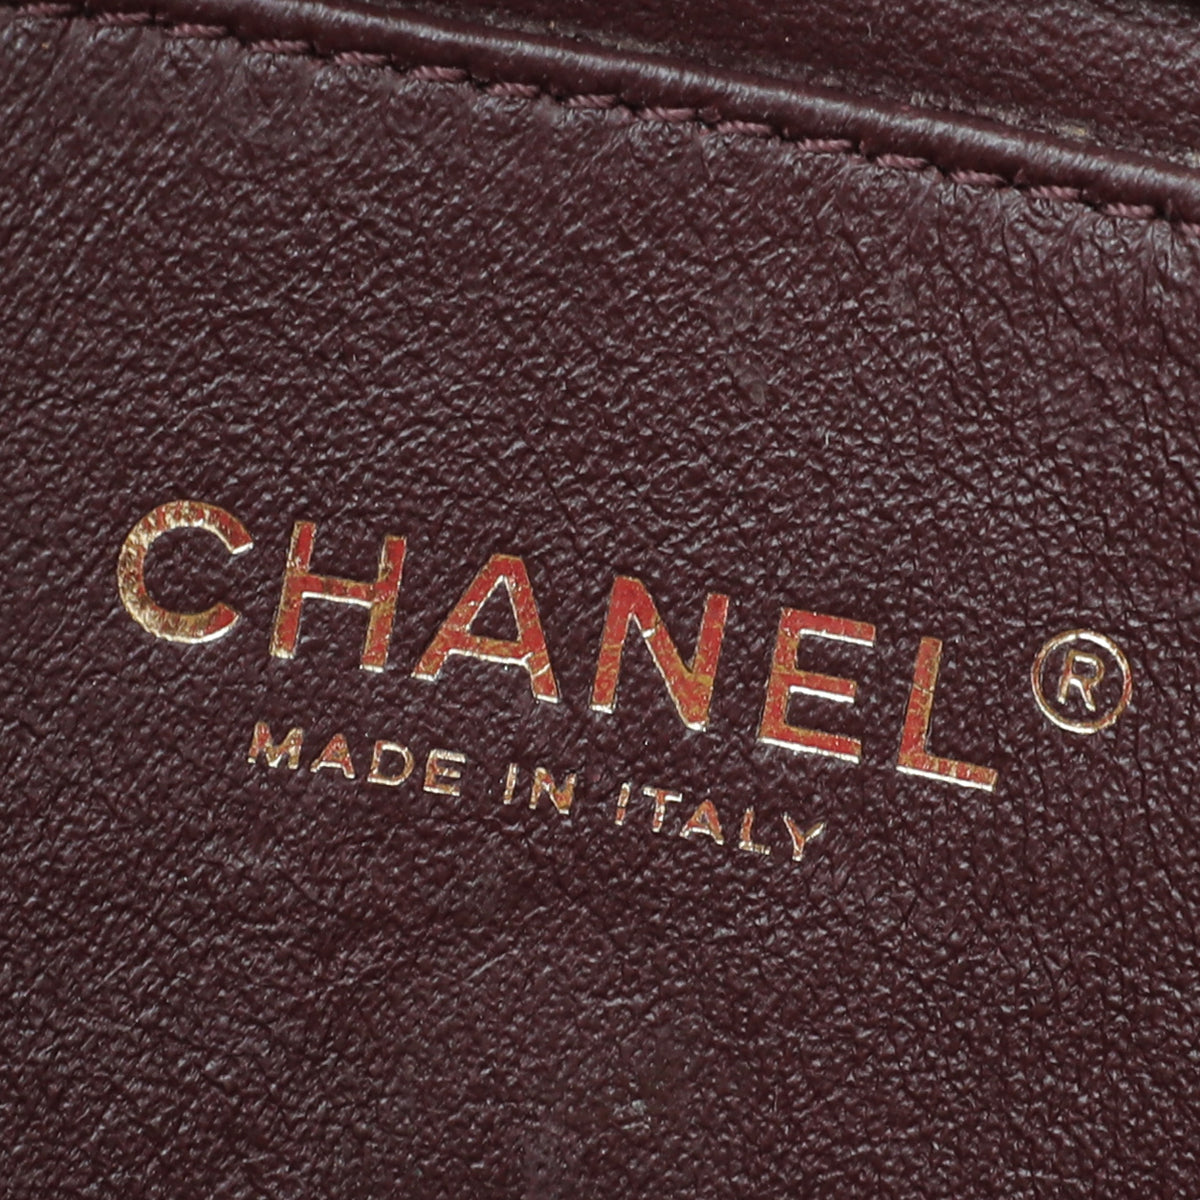 Chanel Metallic Gold Paris-Dubai Pearly Flap Wallet on Chain